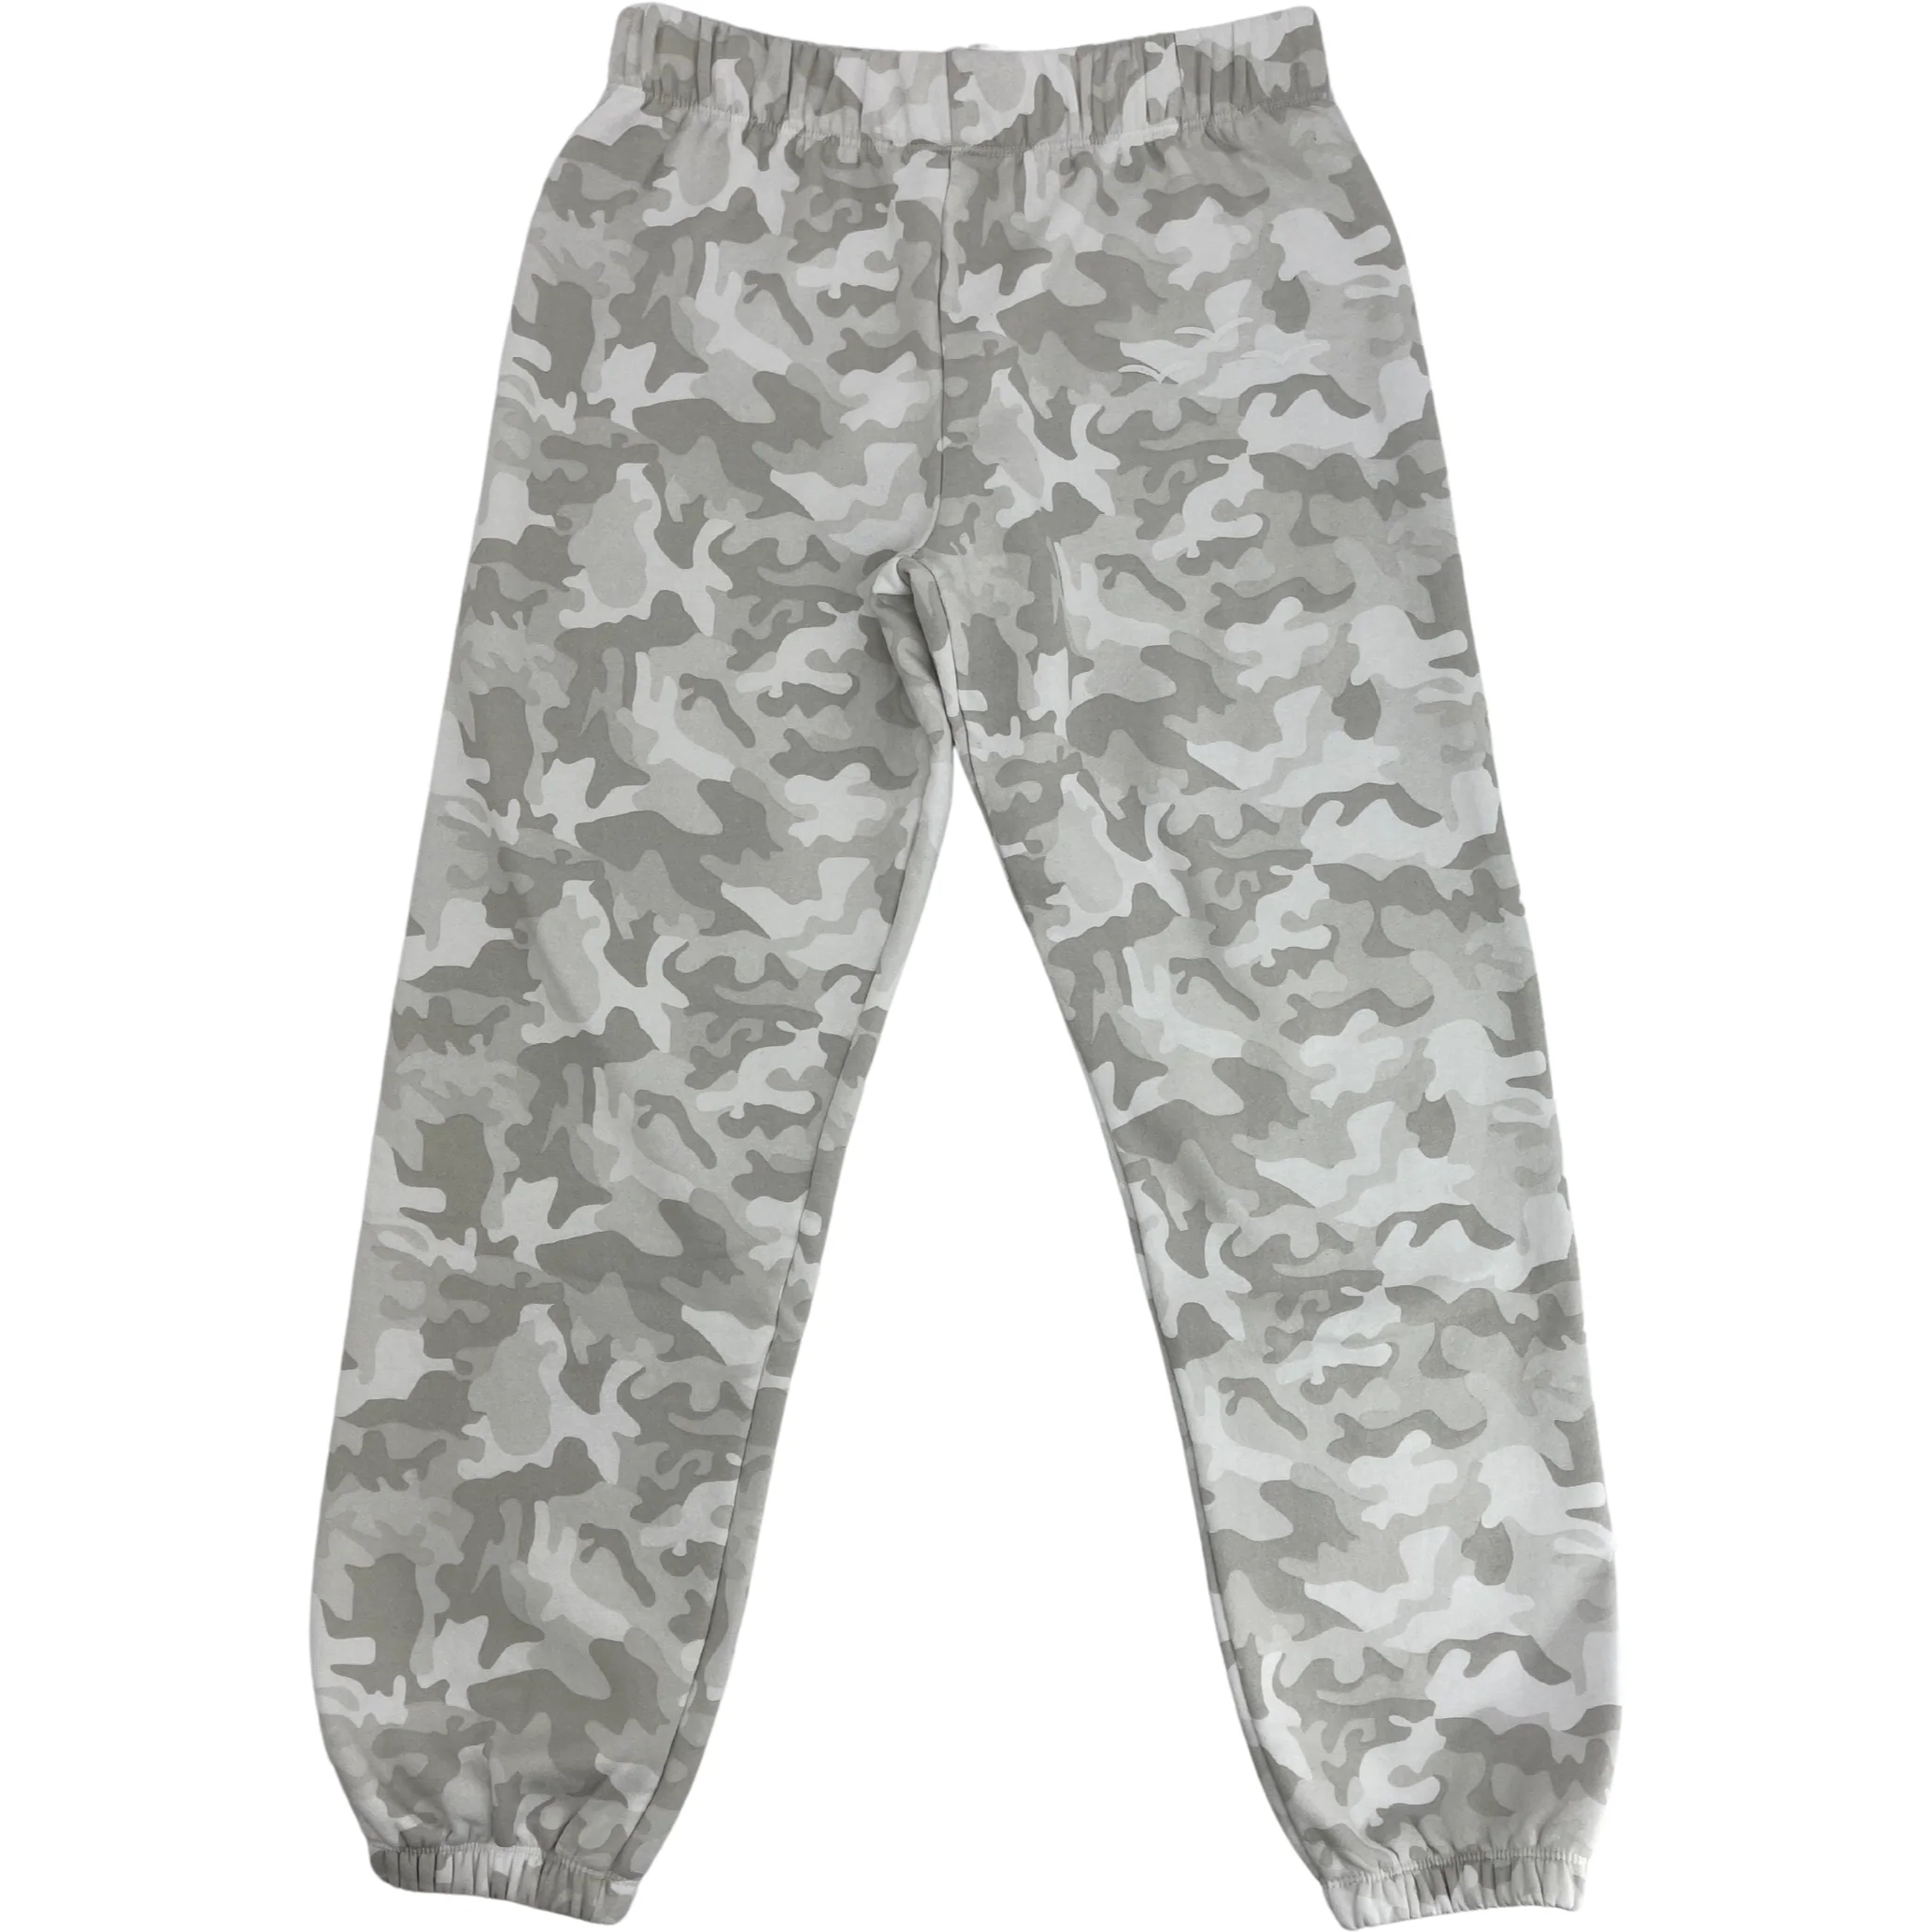 Lazy Pants Women's Sweatpants / White & Grey / Camouflage / Size Medium **No Tags**